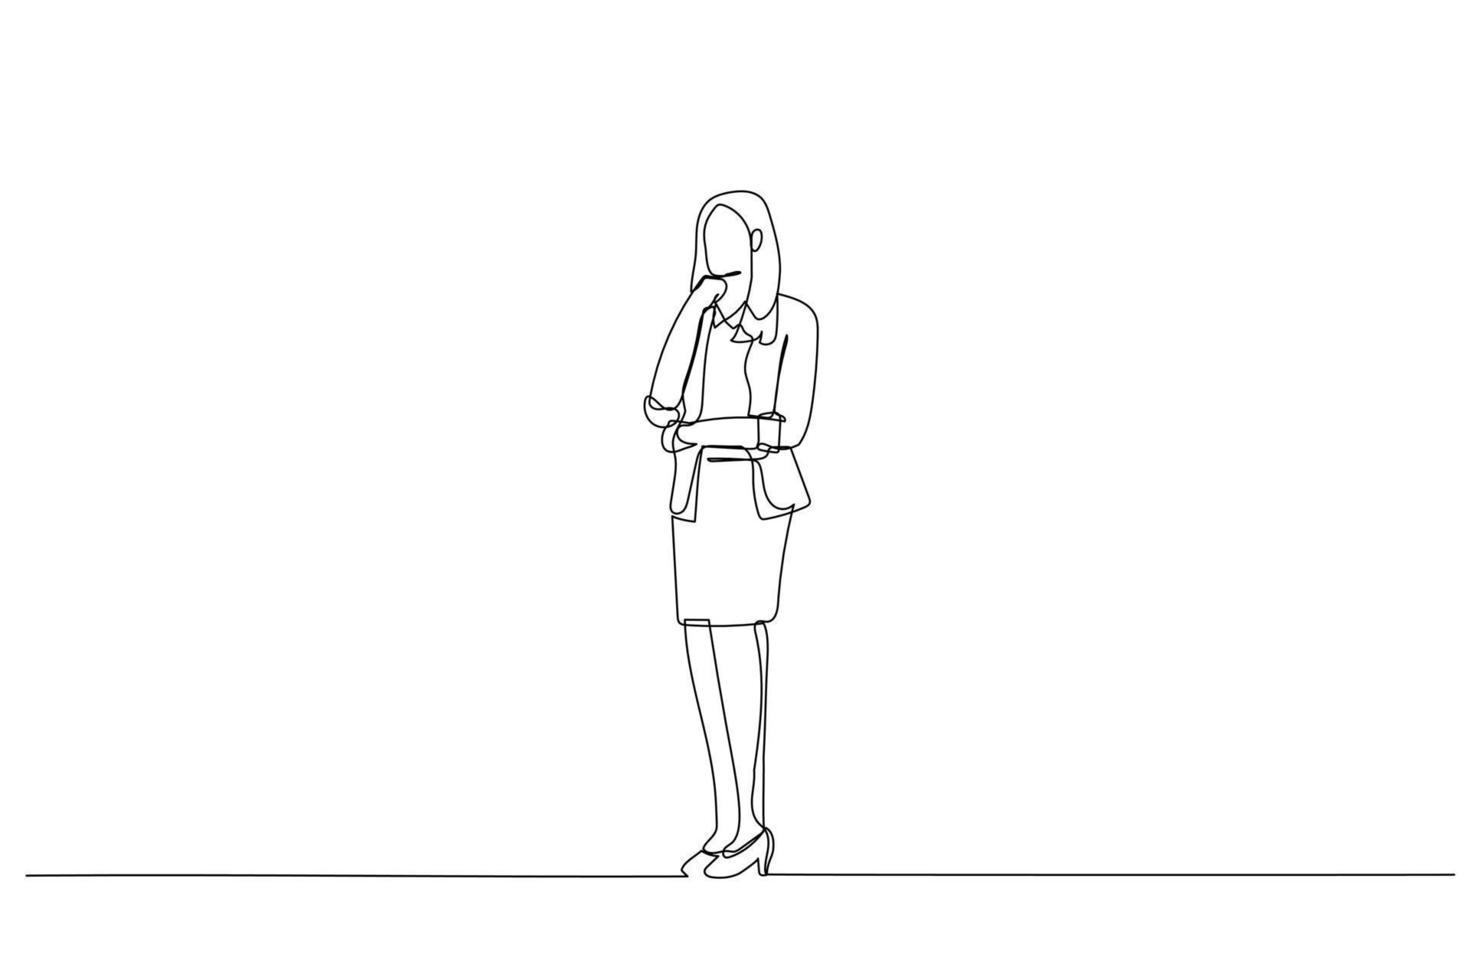 Illustration of businesswoman Standing Against White Background. Single line art style vector